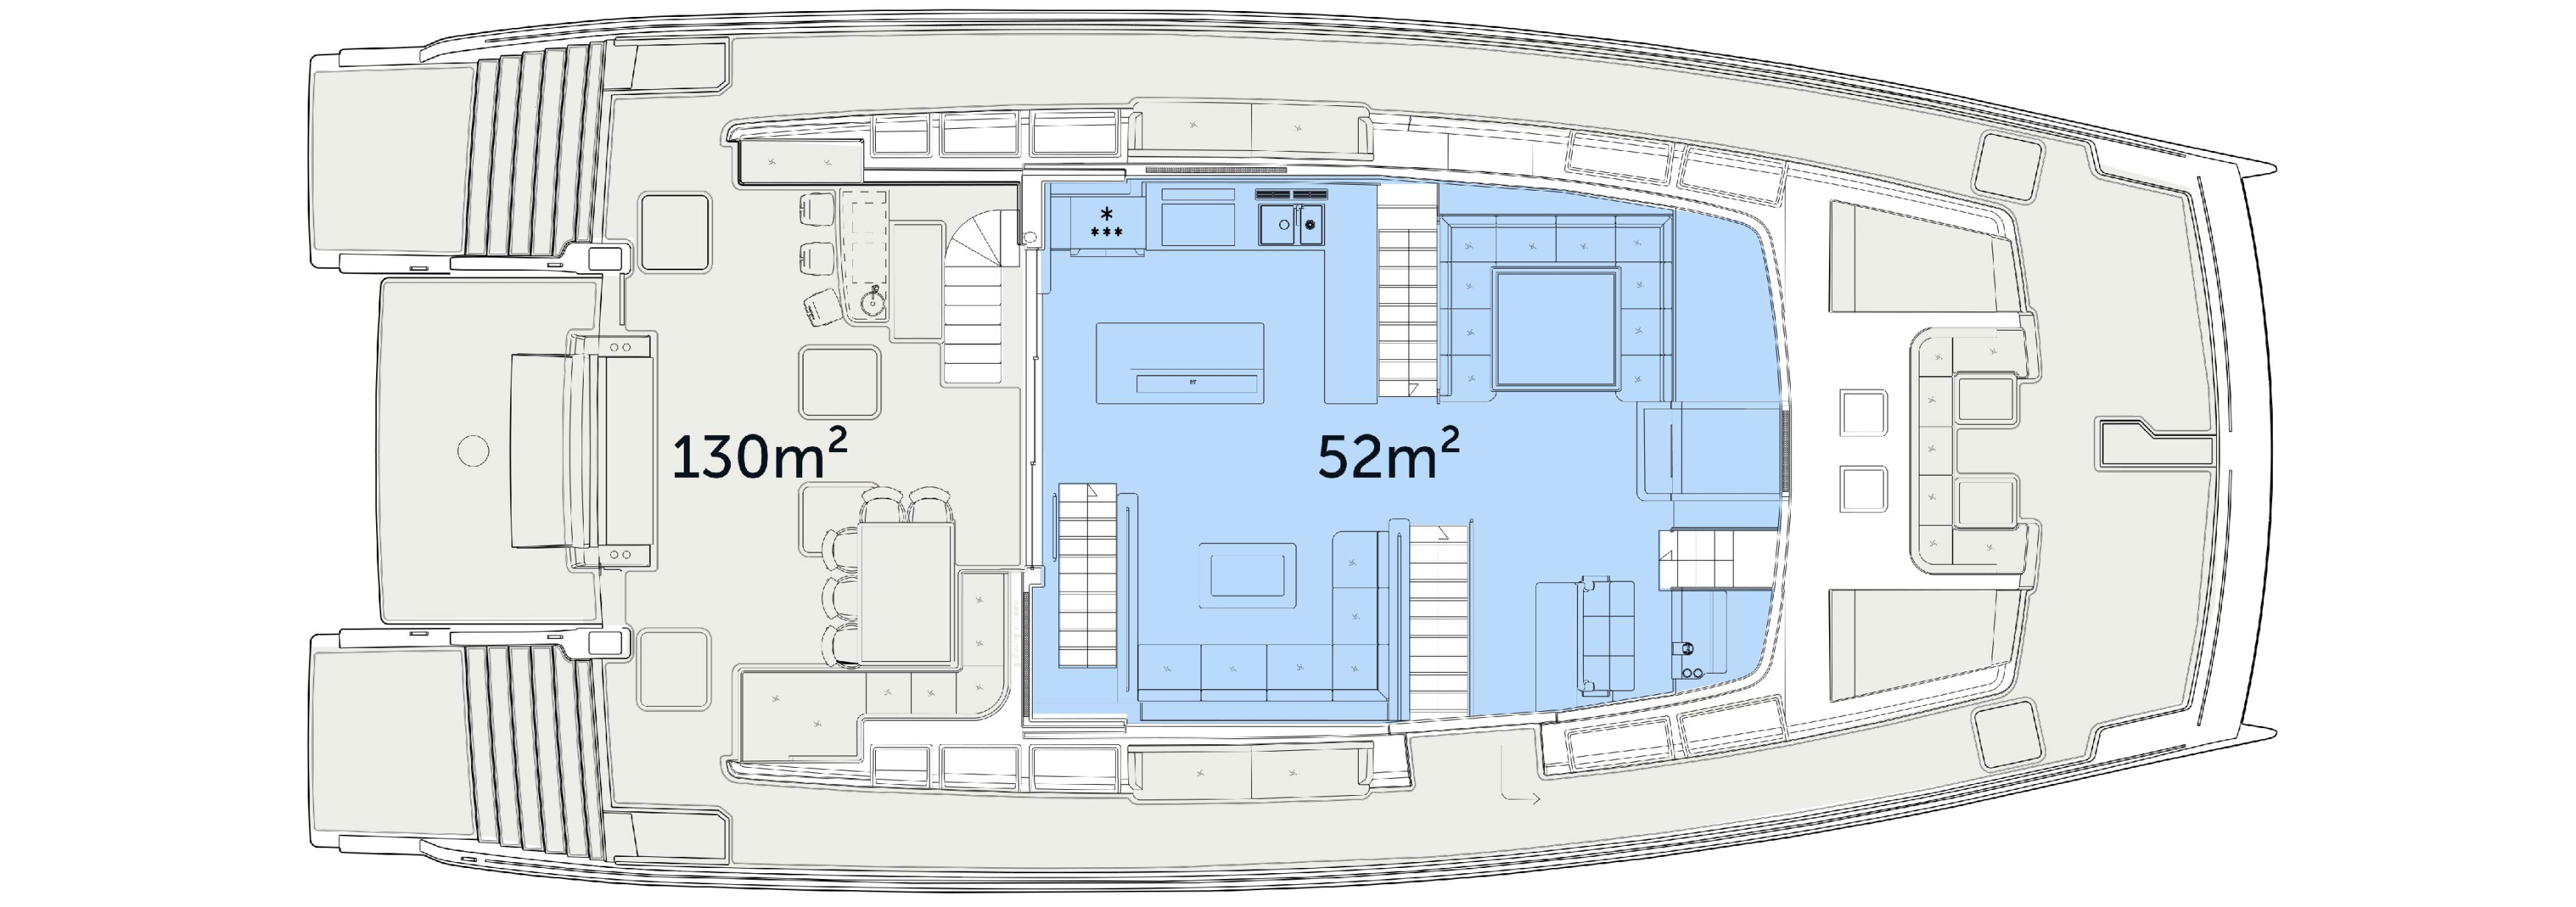 Silent 80 catamaran main deck area plan